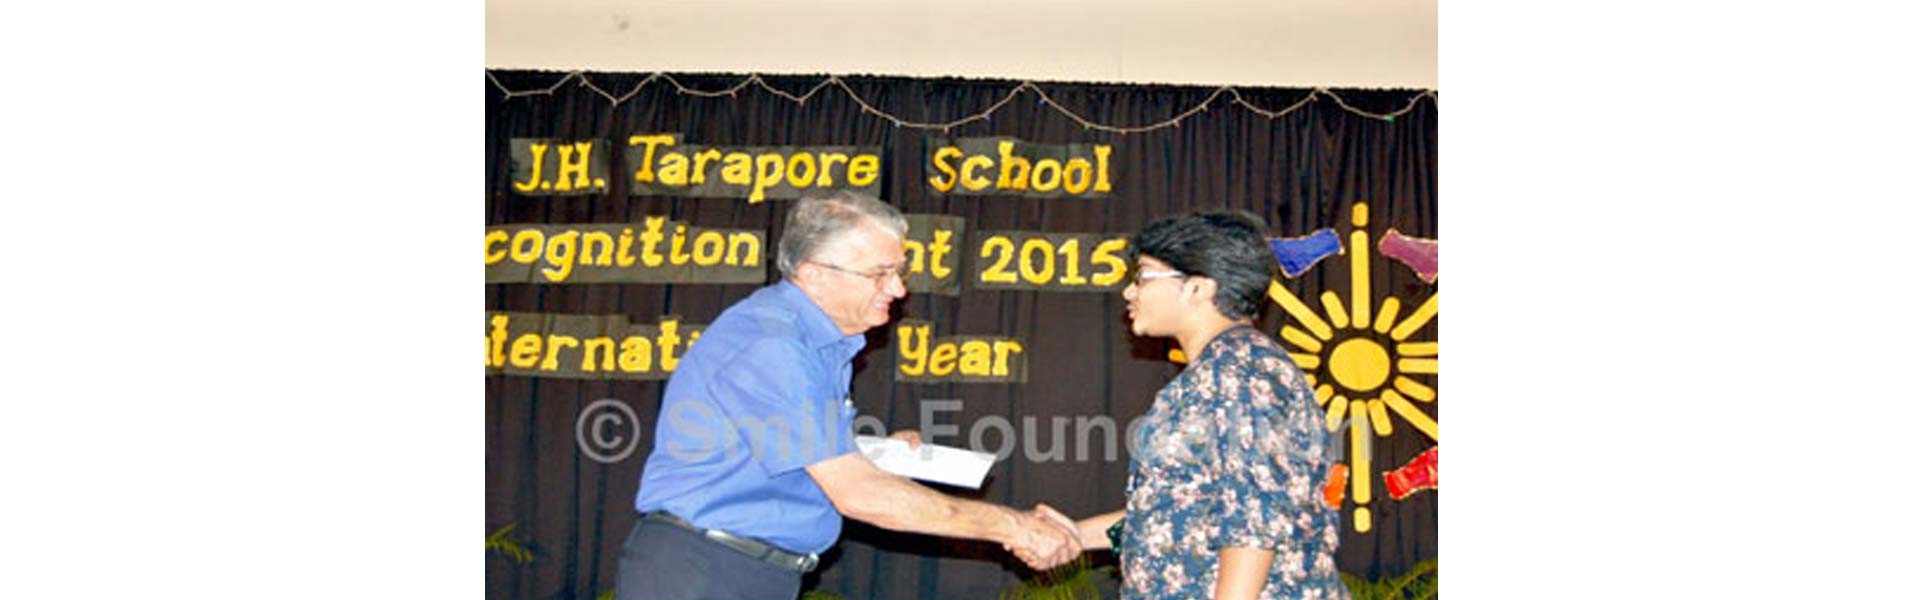 J.H. Tarapore School invites Smile Foundation to "Recognition Night"